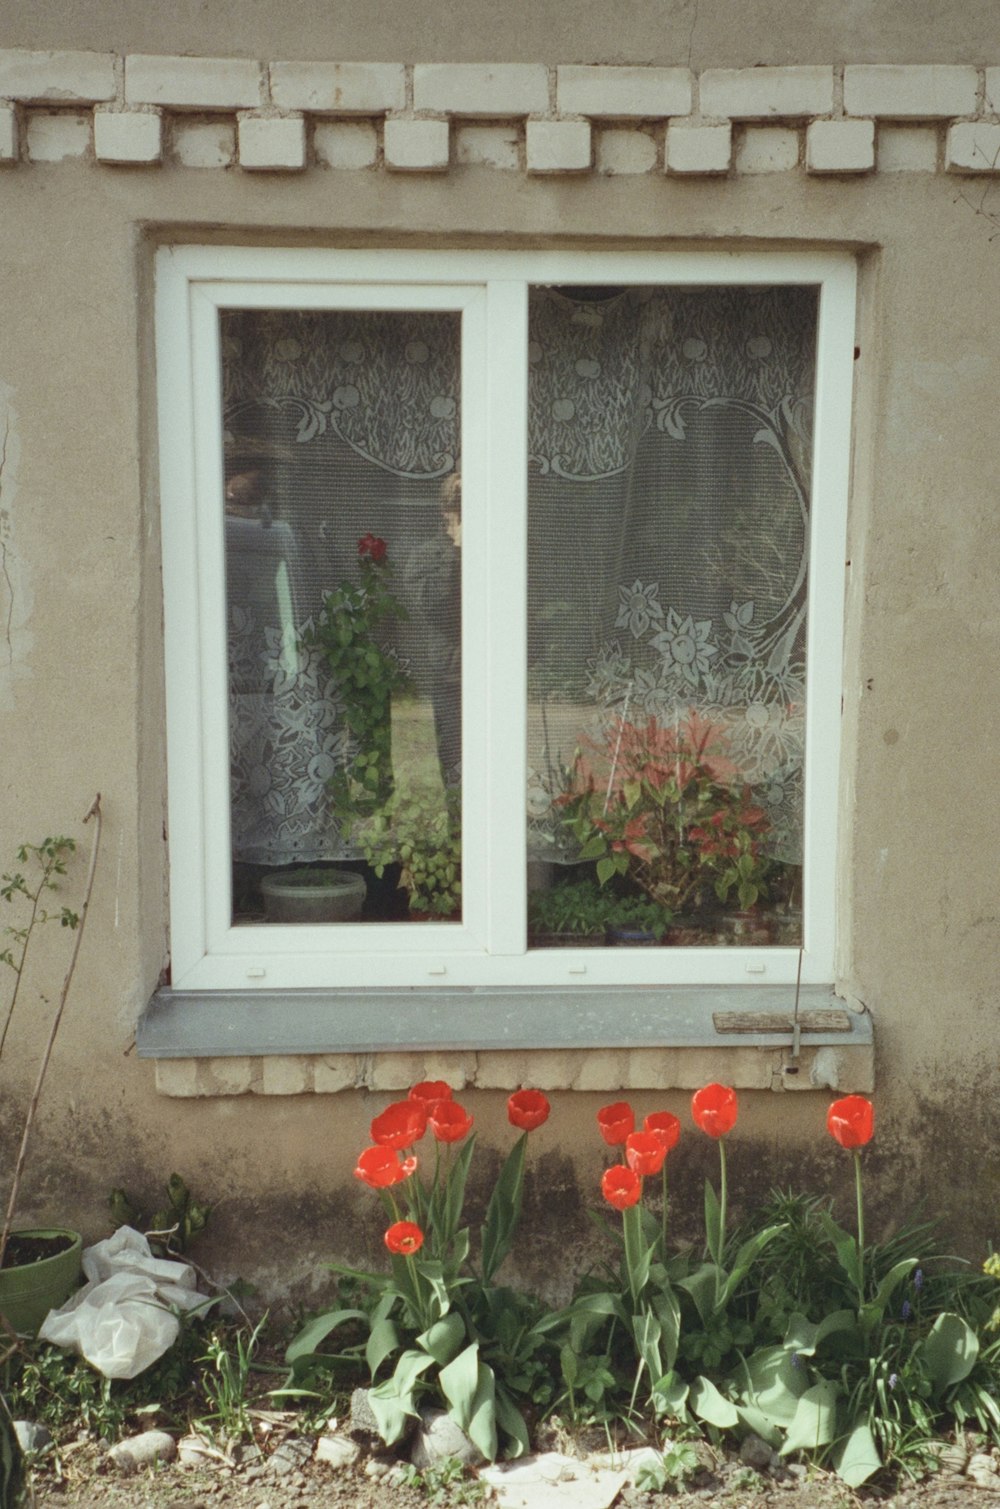 a window that has a bunch of flowers in it